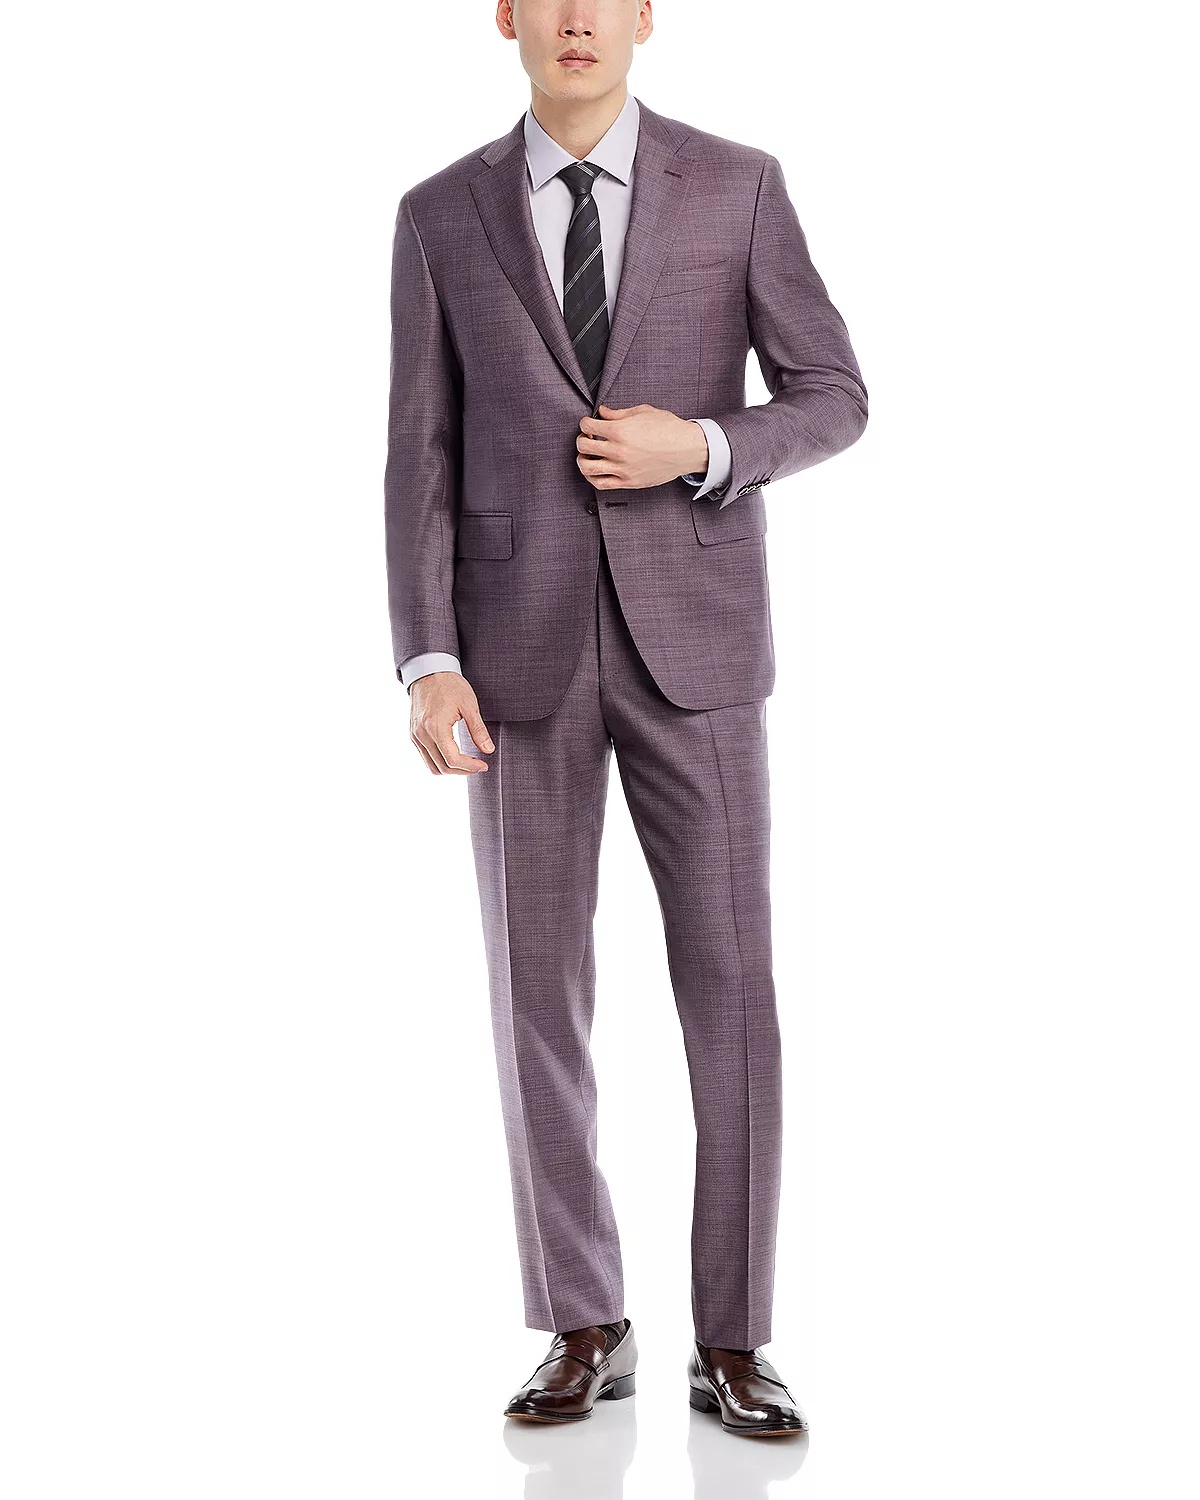 Siena Sharkskin Classic Fit Suit - 1